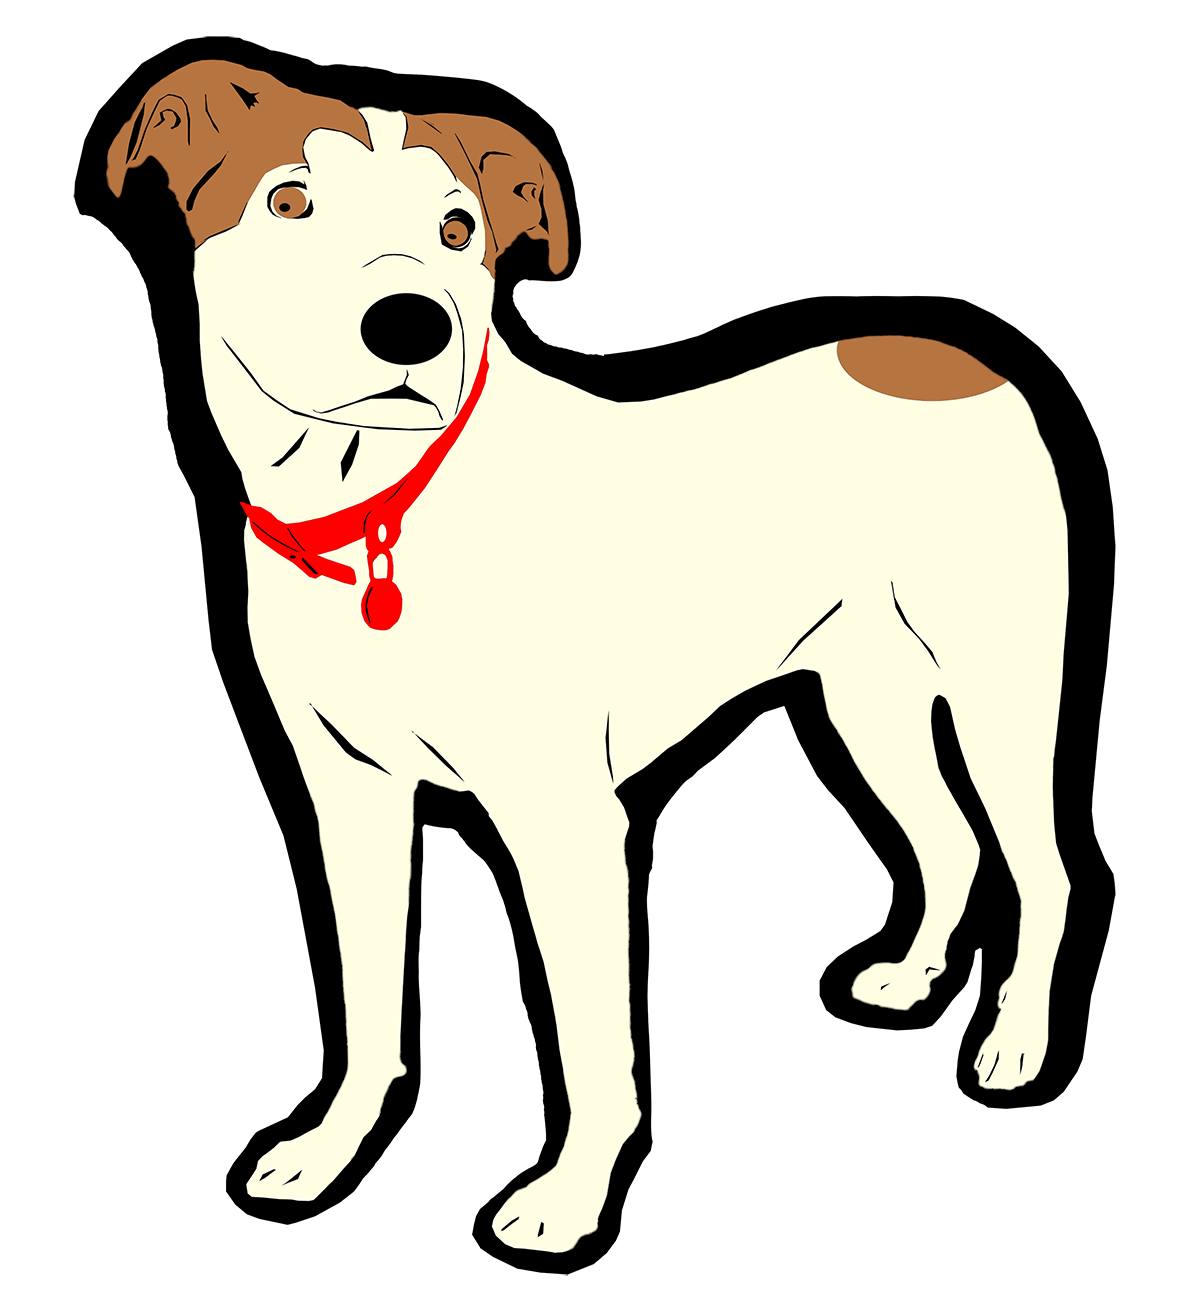 Morgan the Dog portrait using Cricut